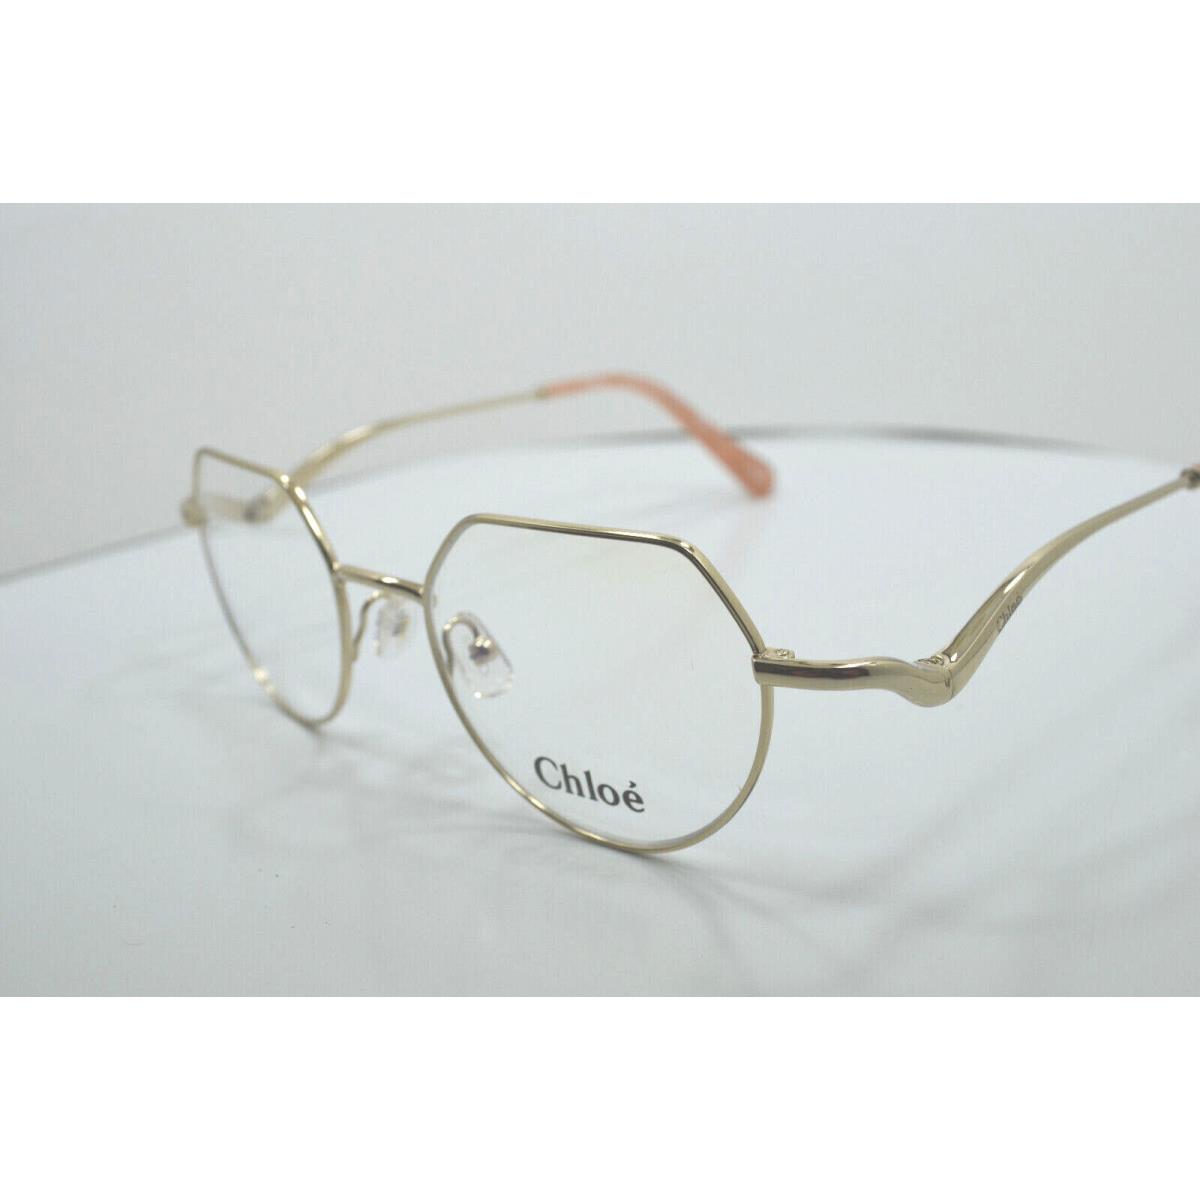 Chloé Chloe CE 2156 906 Eyeglasses Frame